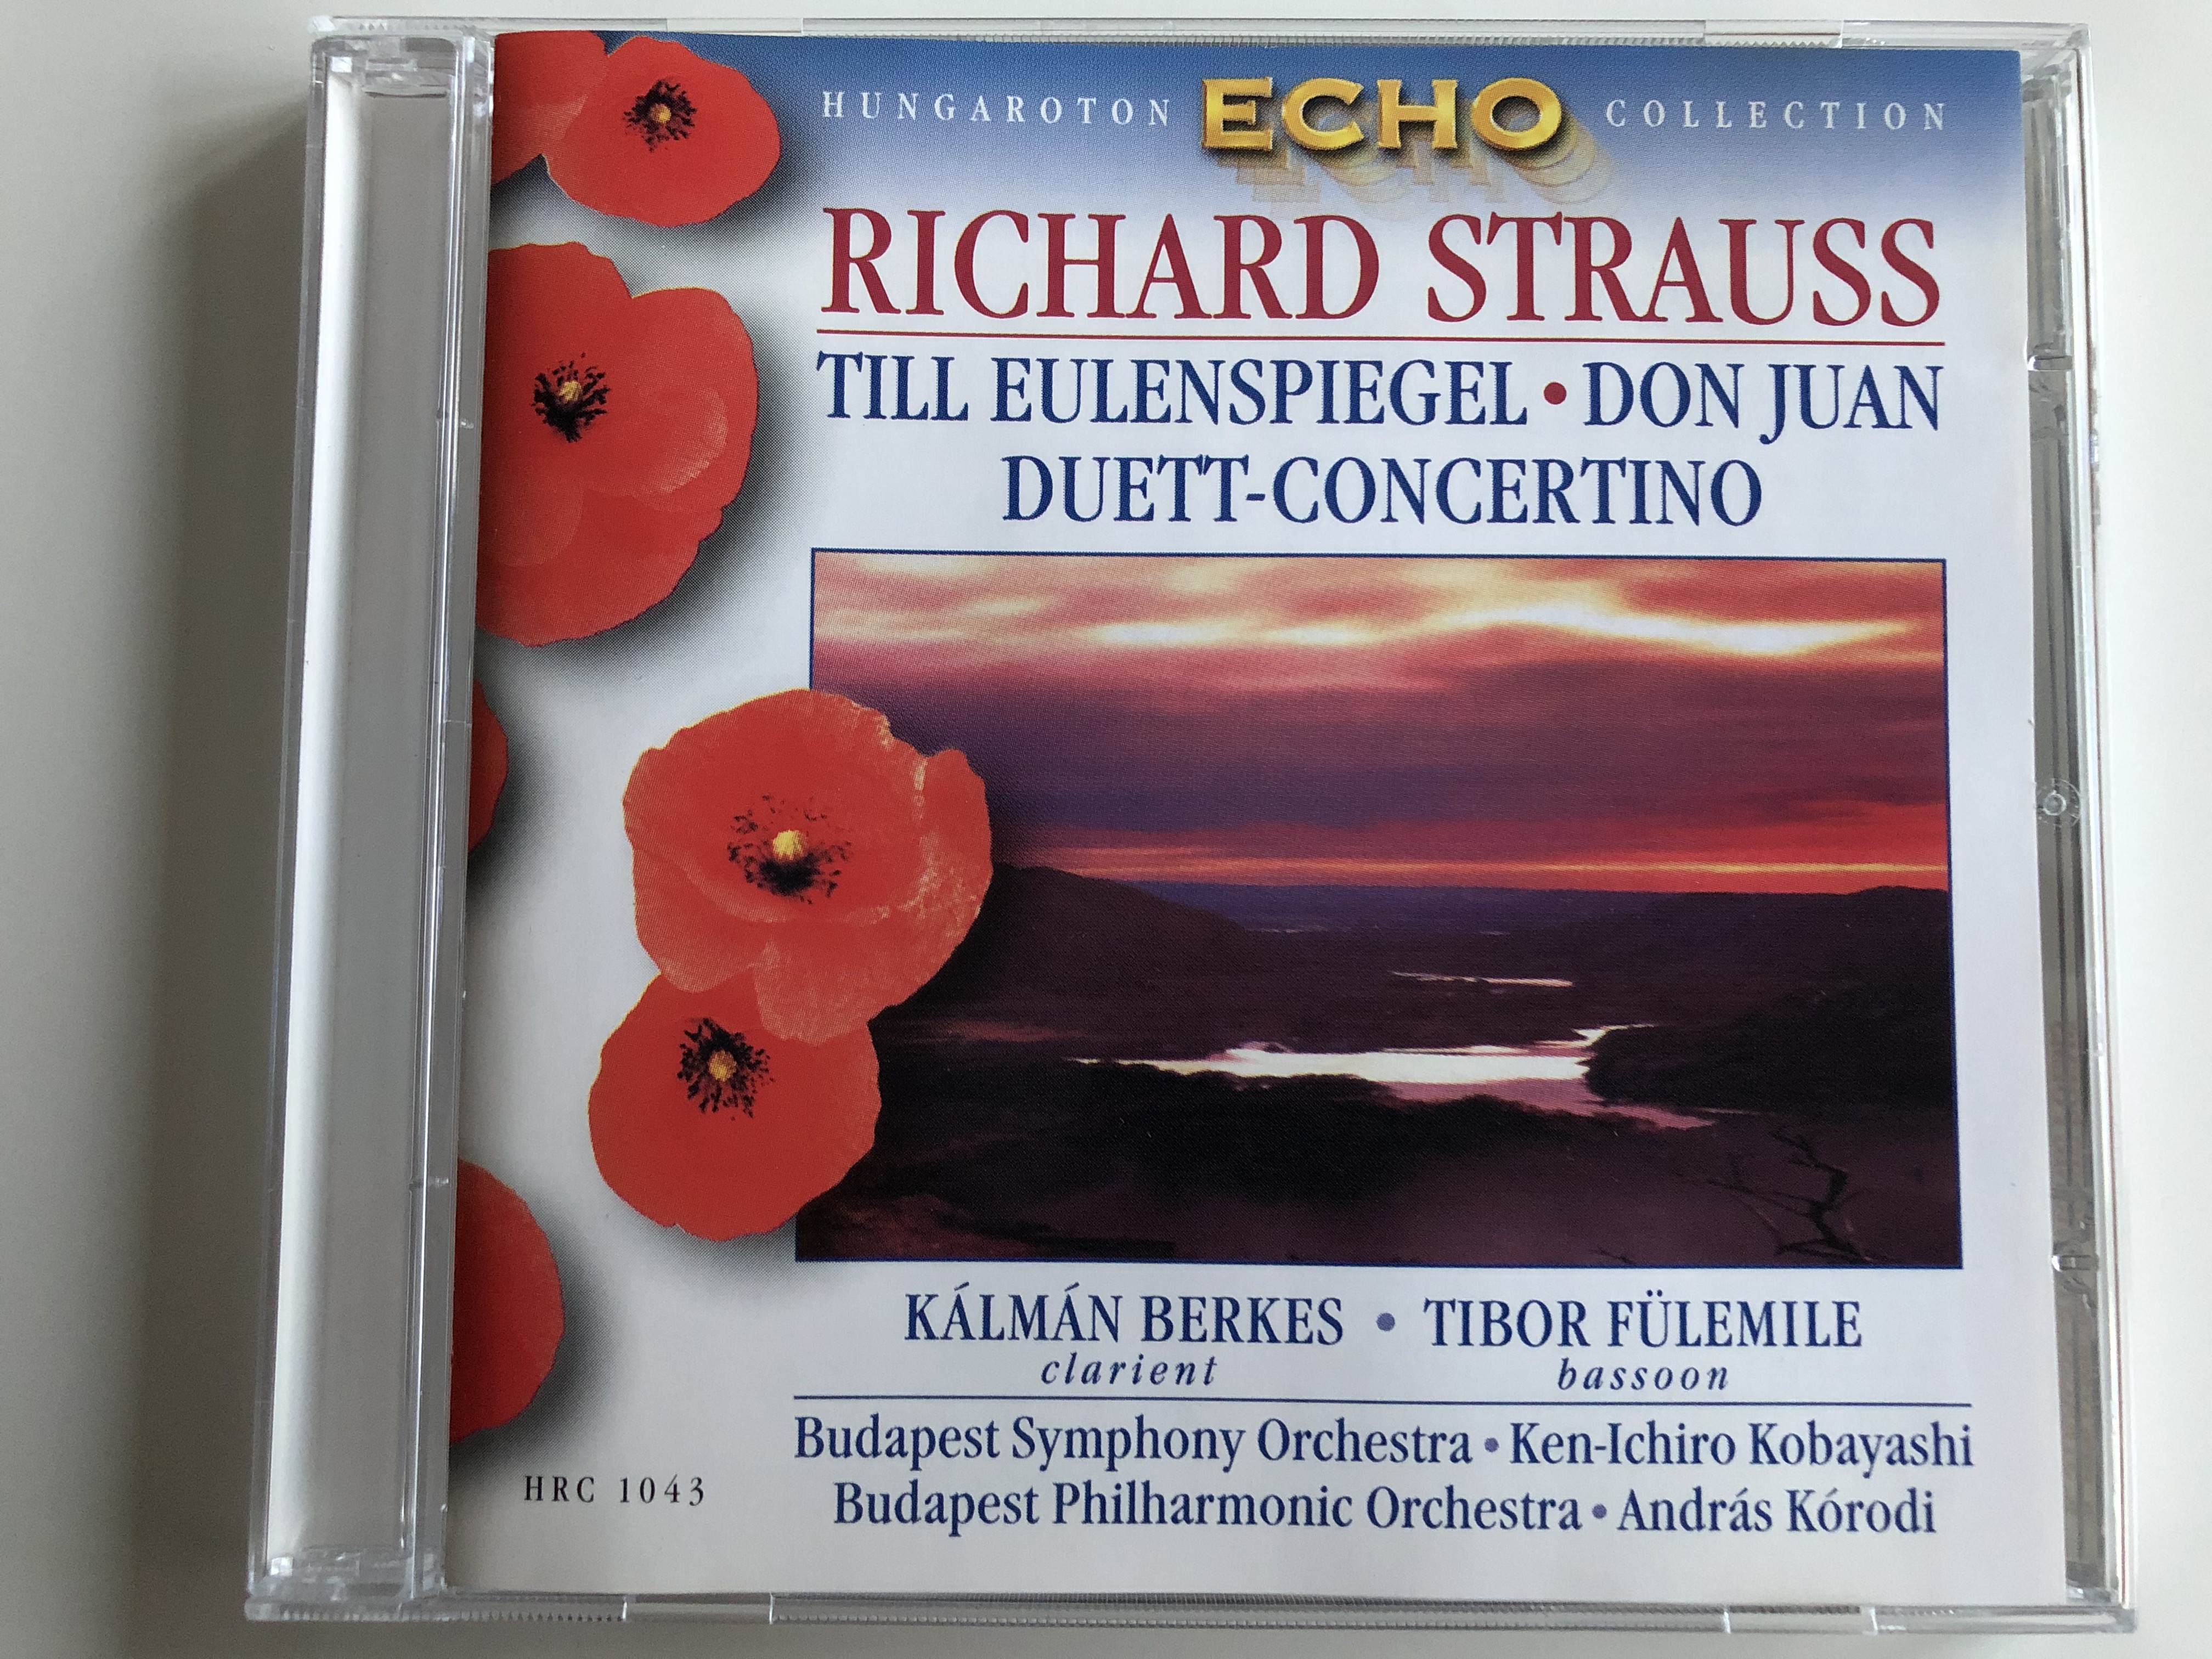 richard-strauss-till-eulenspiegel-don-juan-duett-concertino-k-lm-n-berkes-tibor-f-lemile-budapest-symphony-orchestra-ken-ichiro-kobayashi-budapest-philharmonic-orchestra-andr-s-k-rodi-1-.jpg